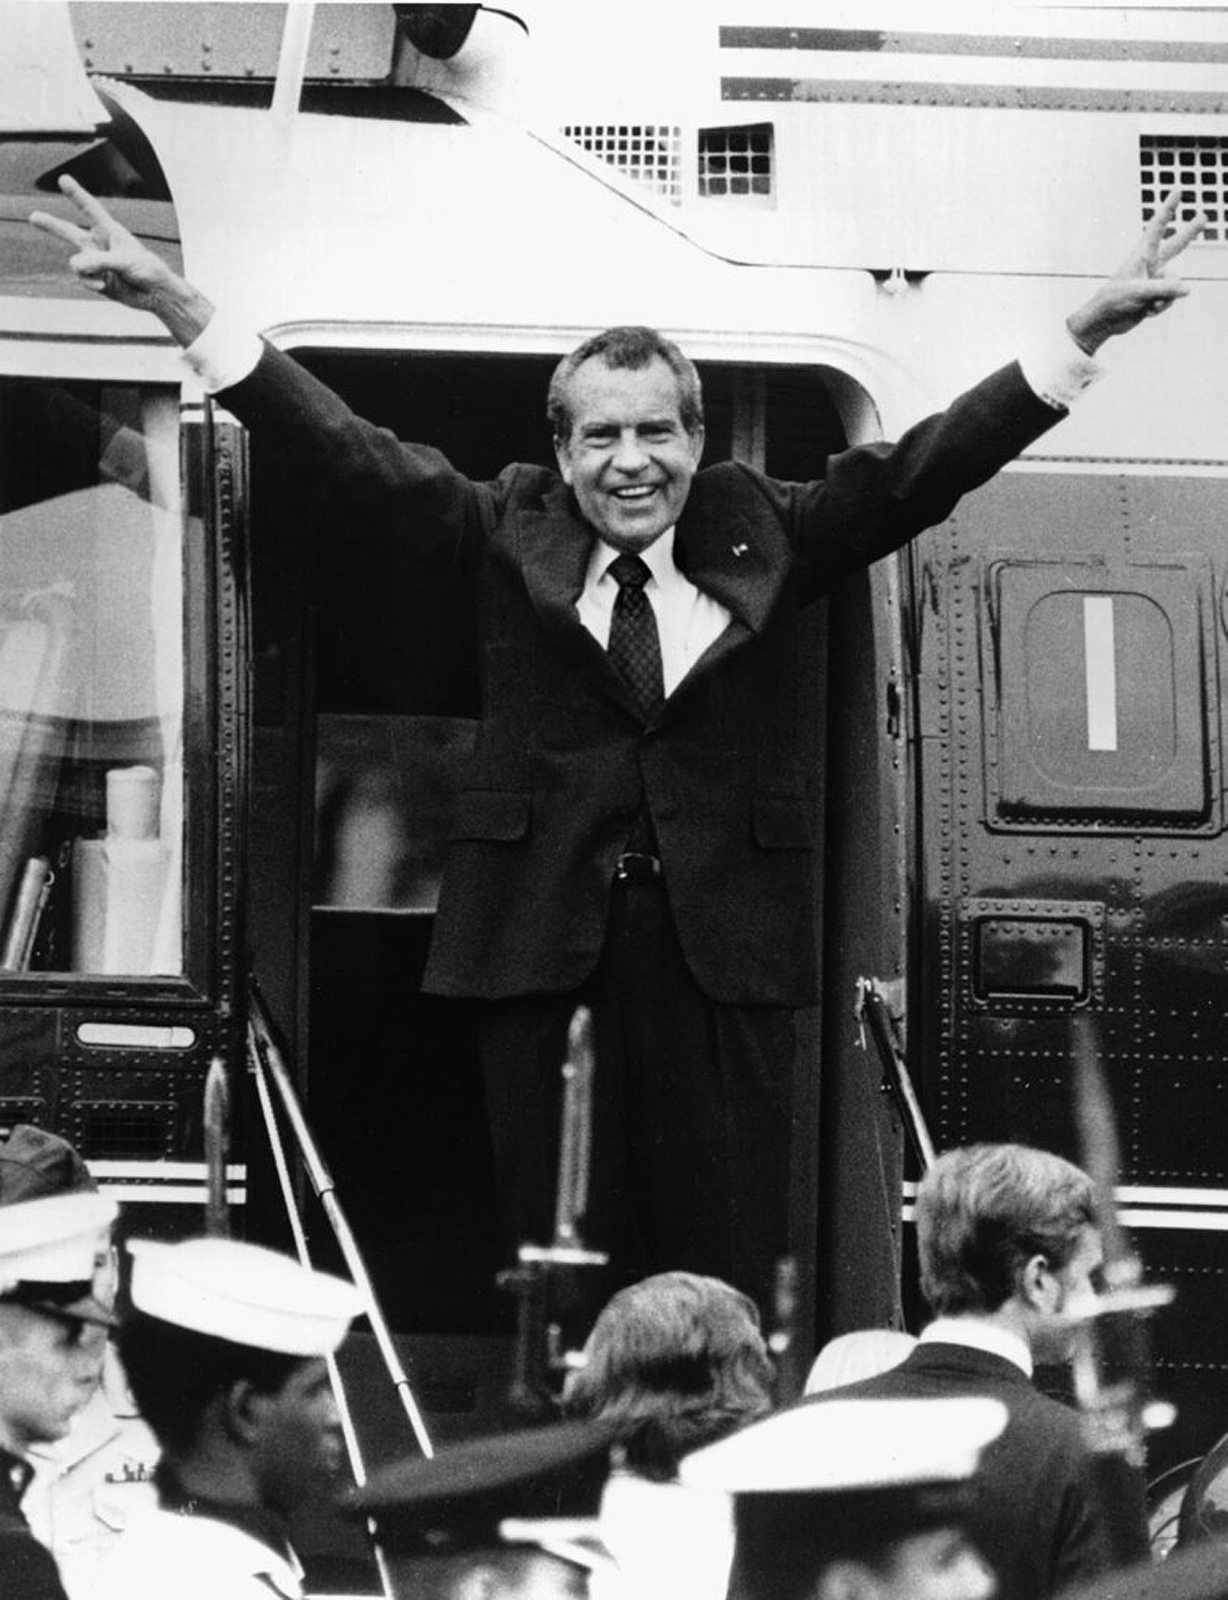 Nixon leaving DC